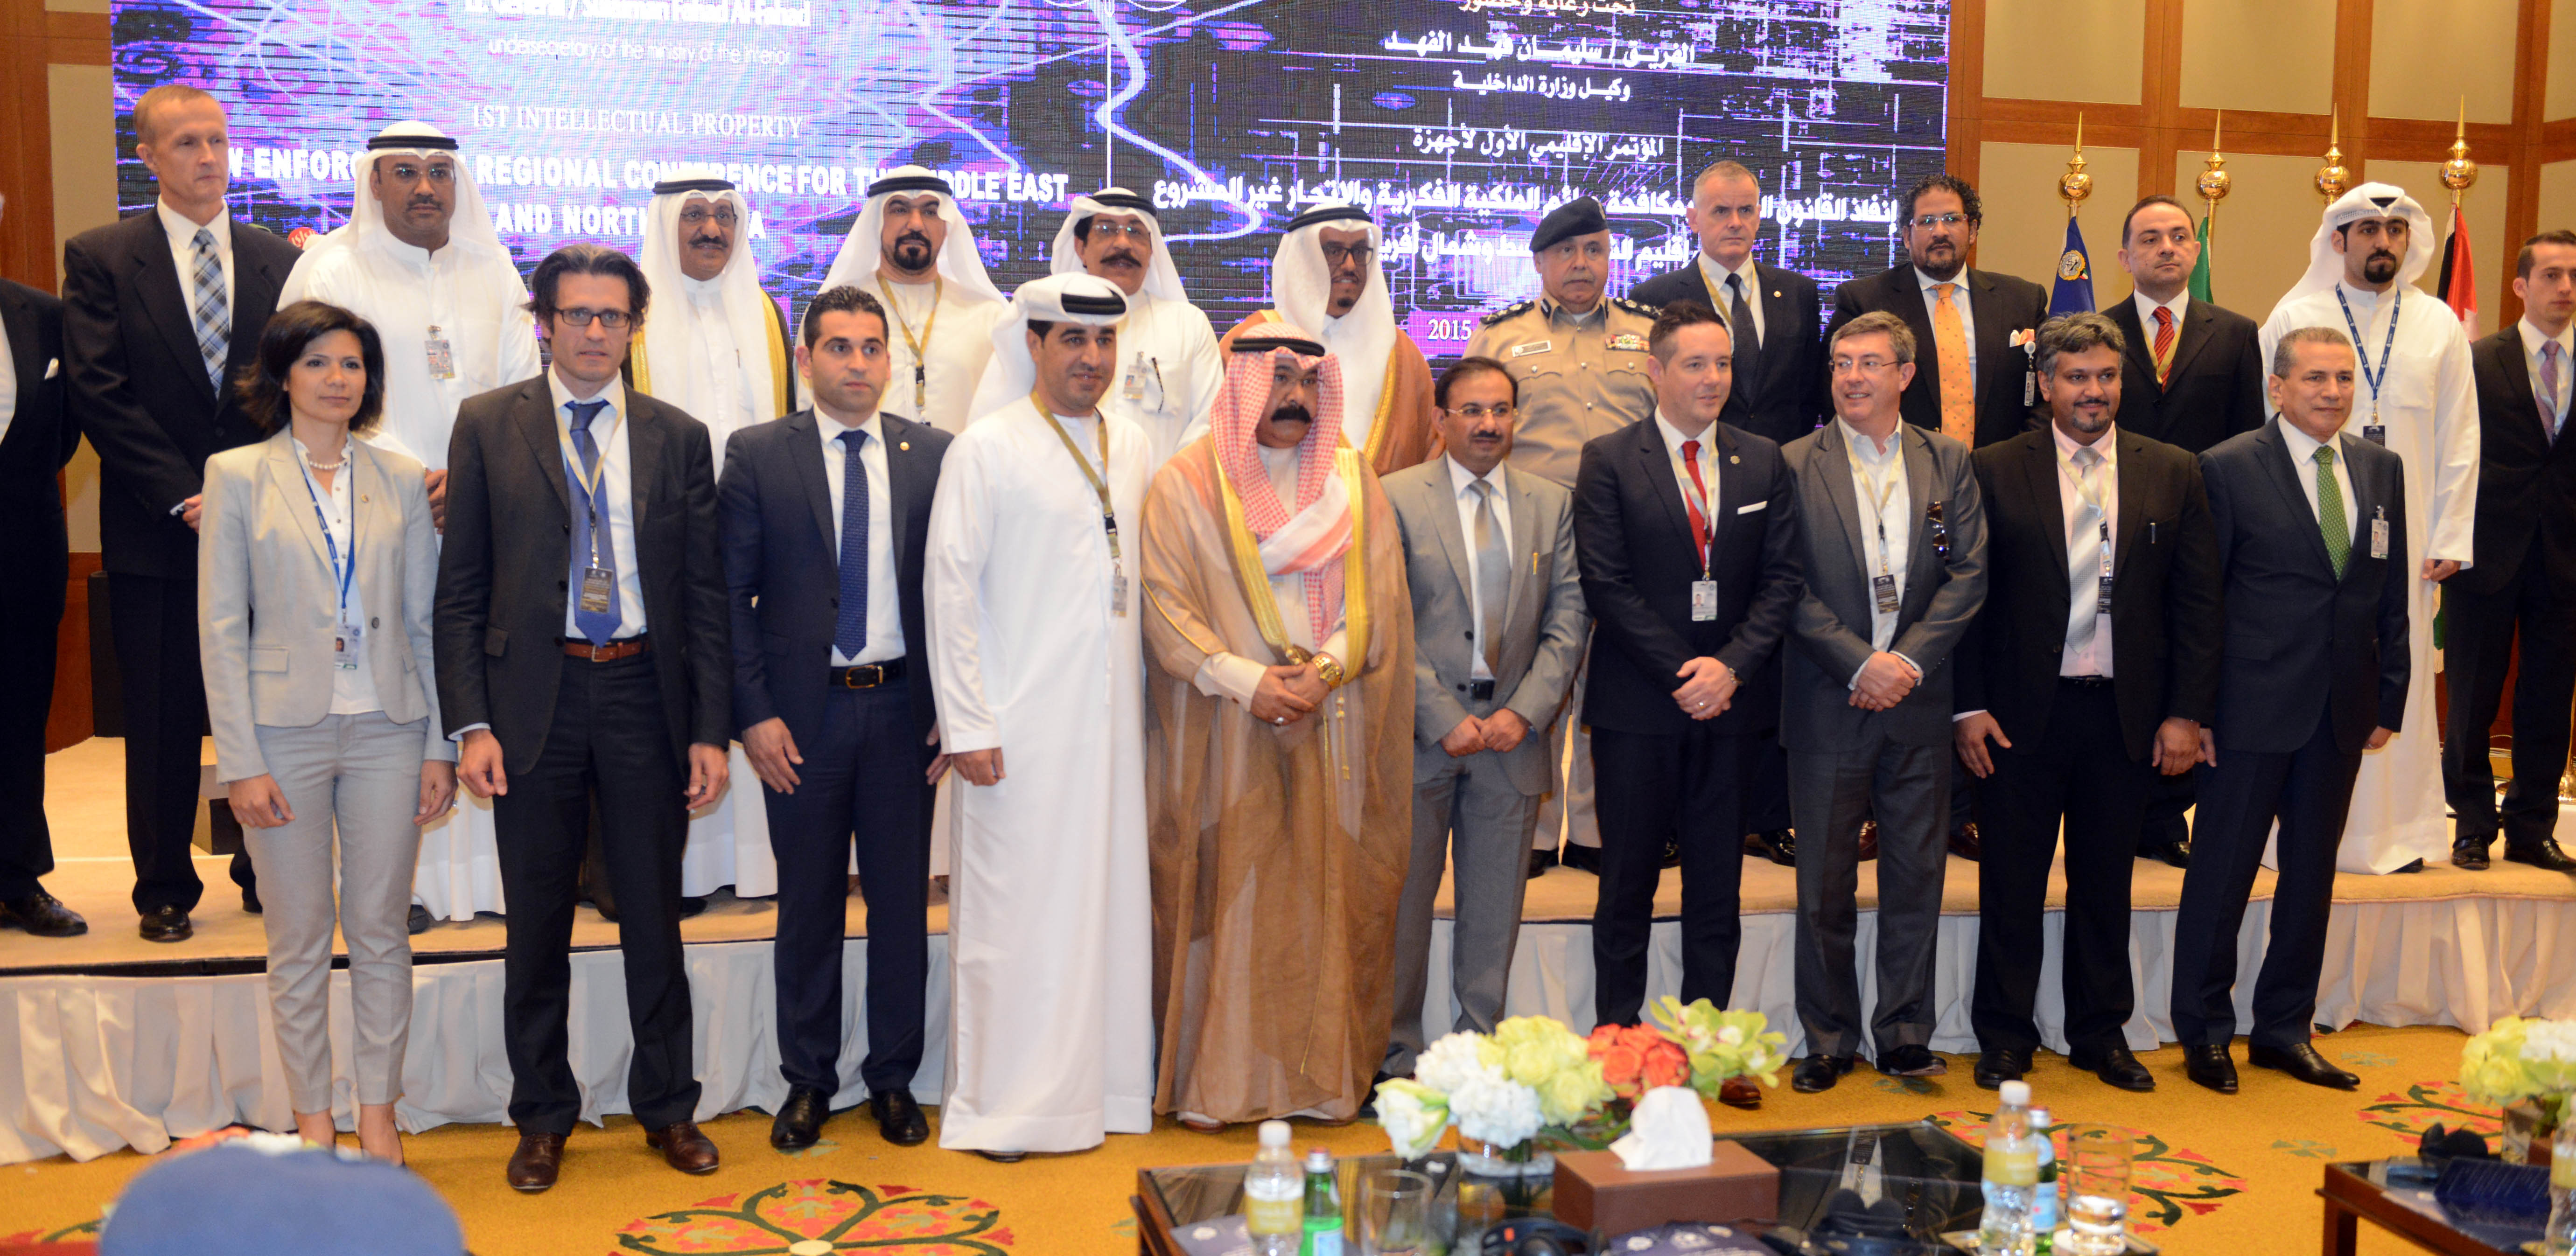 Regional conf. on intellectual property kicks off in Kuwait